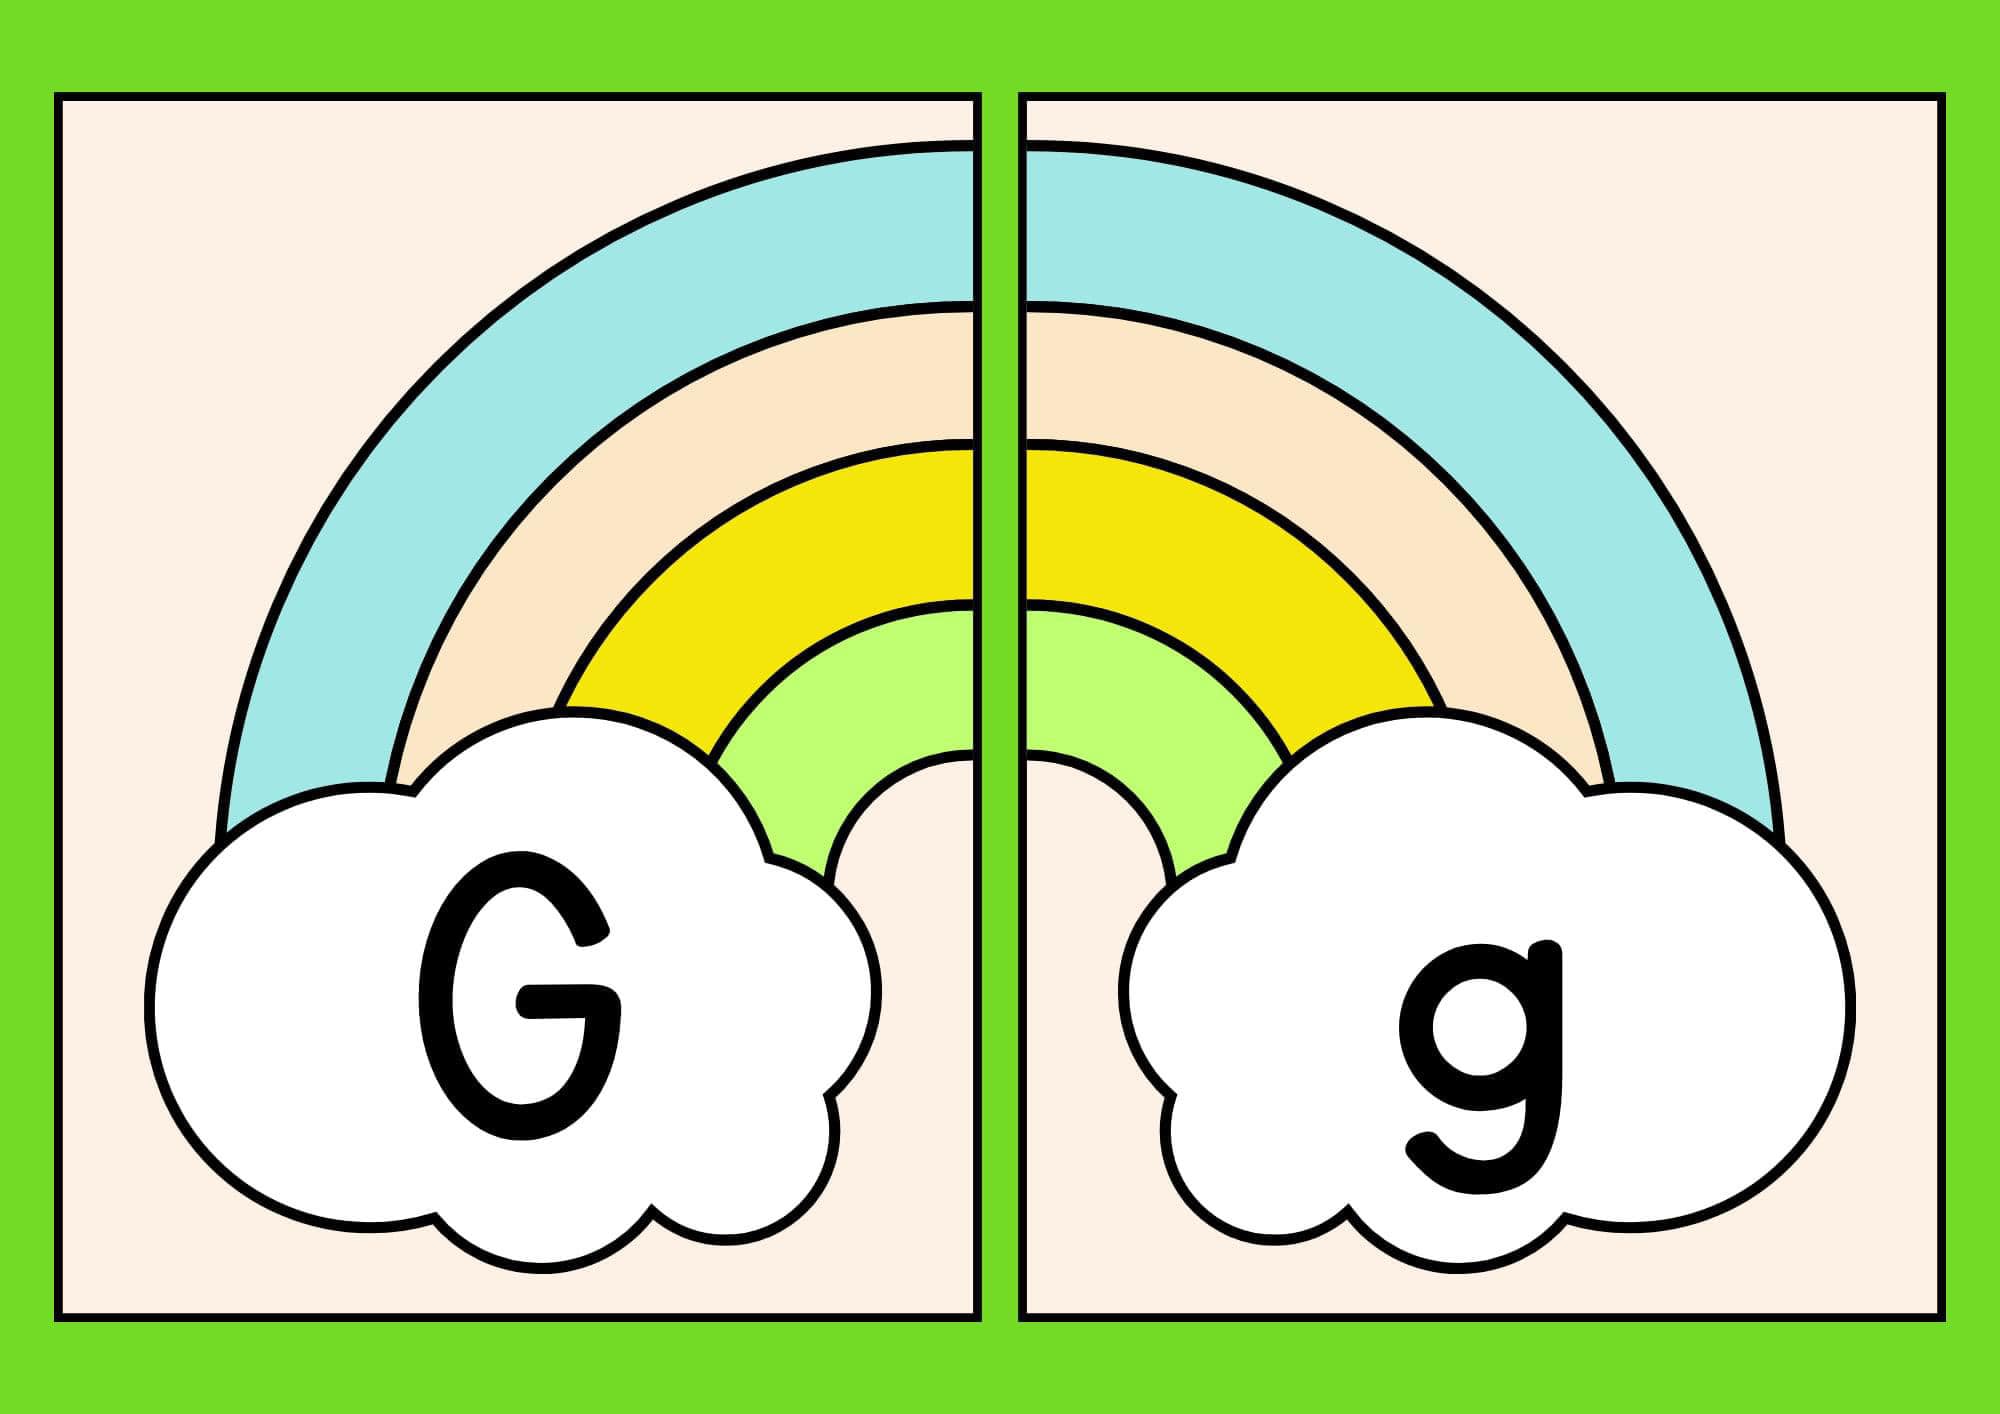 Alfabeto arco íris Gg